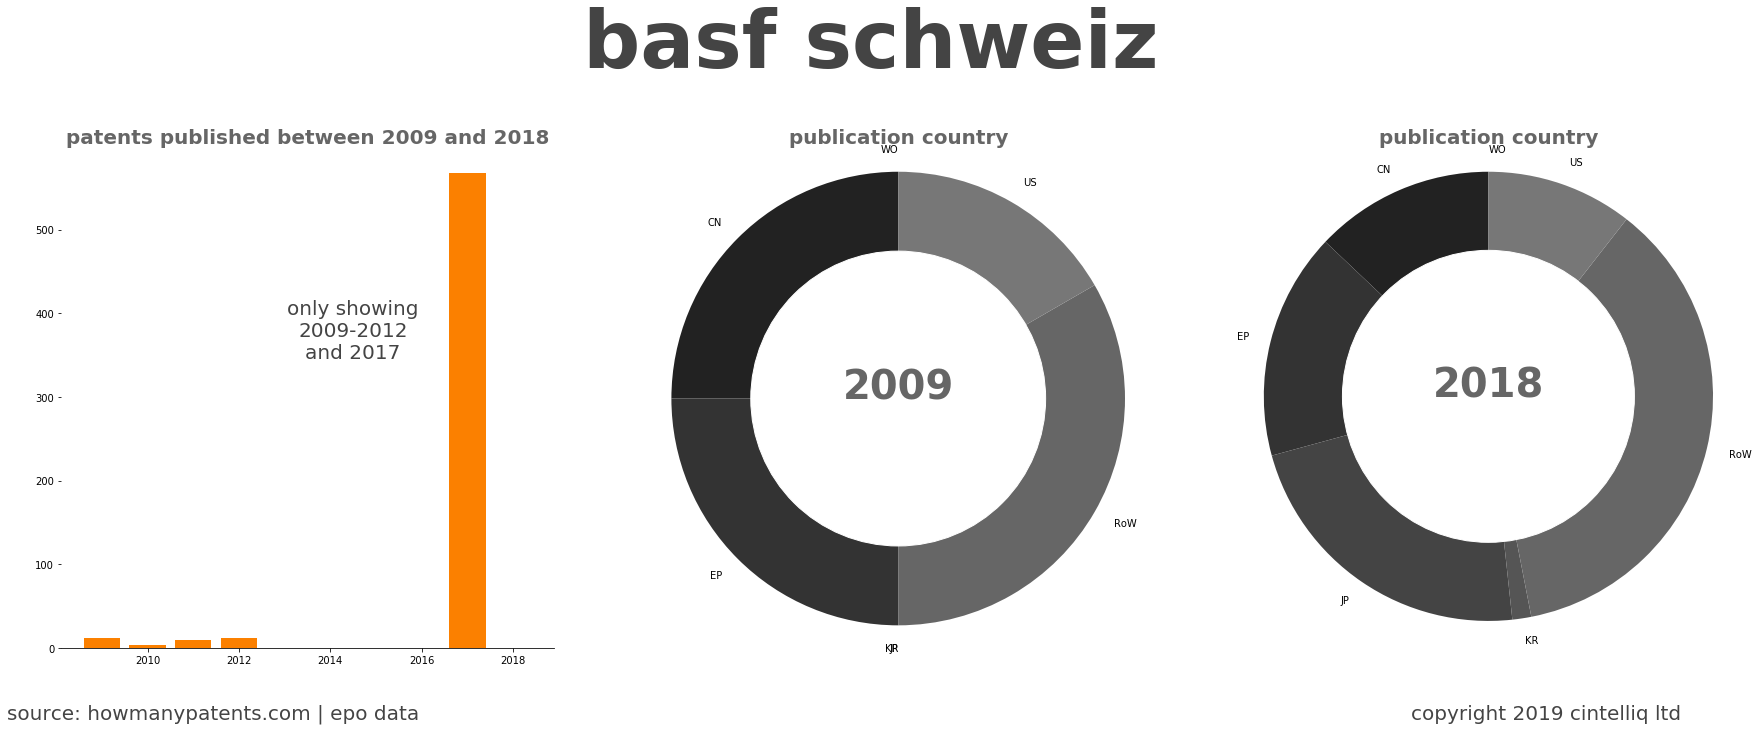 summary of patents for Basf Schweiz